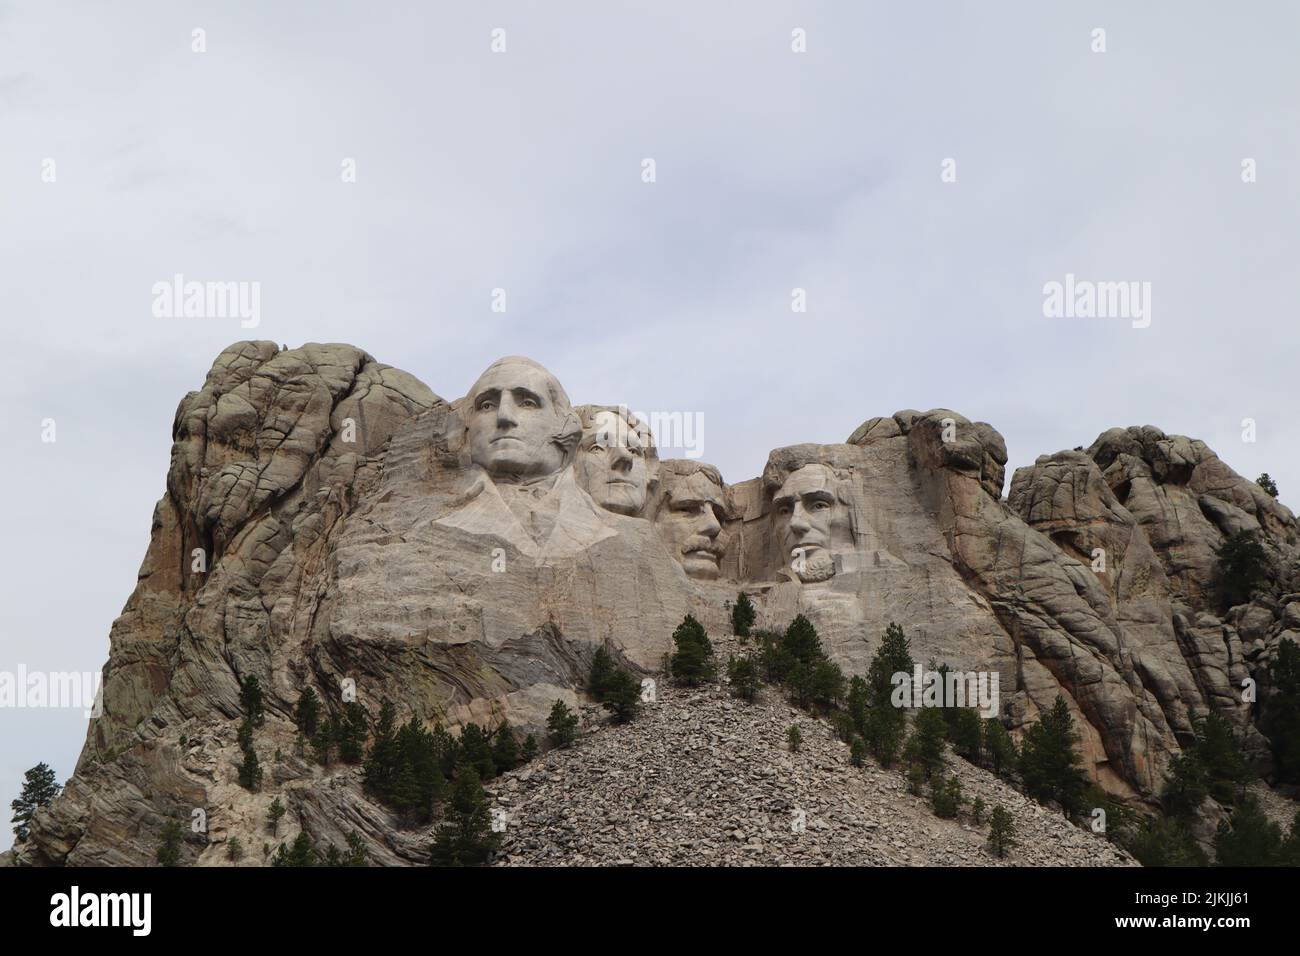 The view of Mount Rushmore National Memorial in the Black Hills near Keystone, South Dakota, USA. Stock Photo